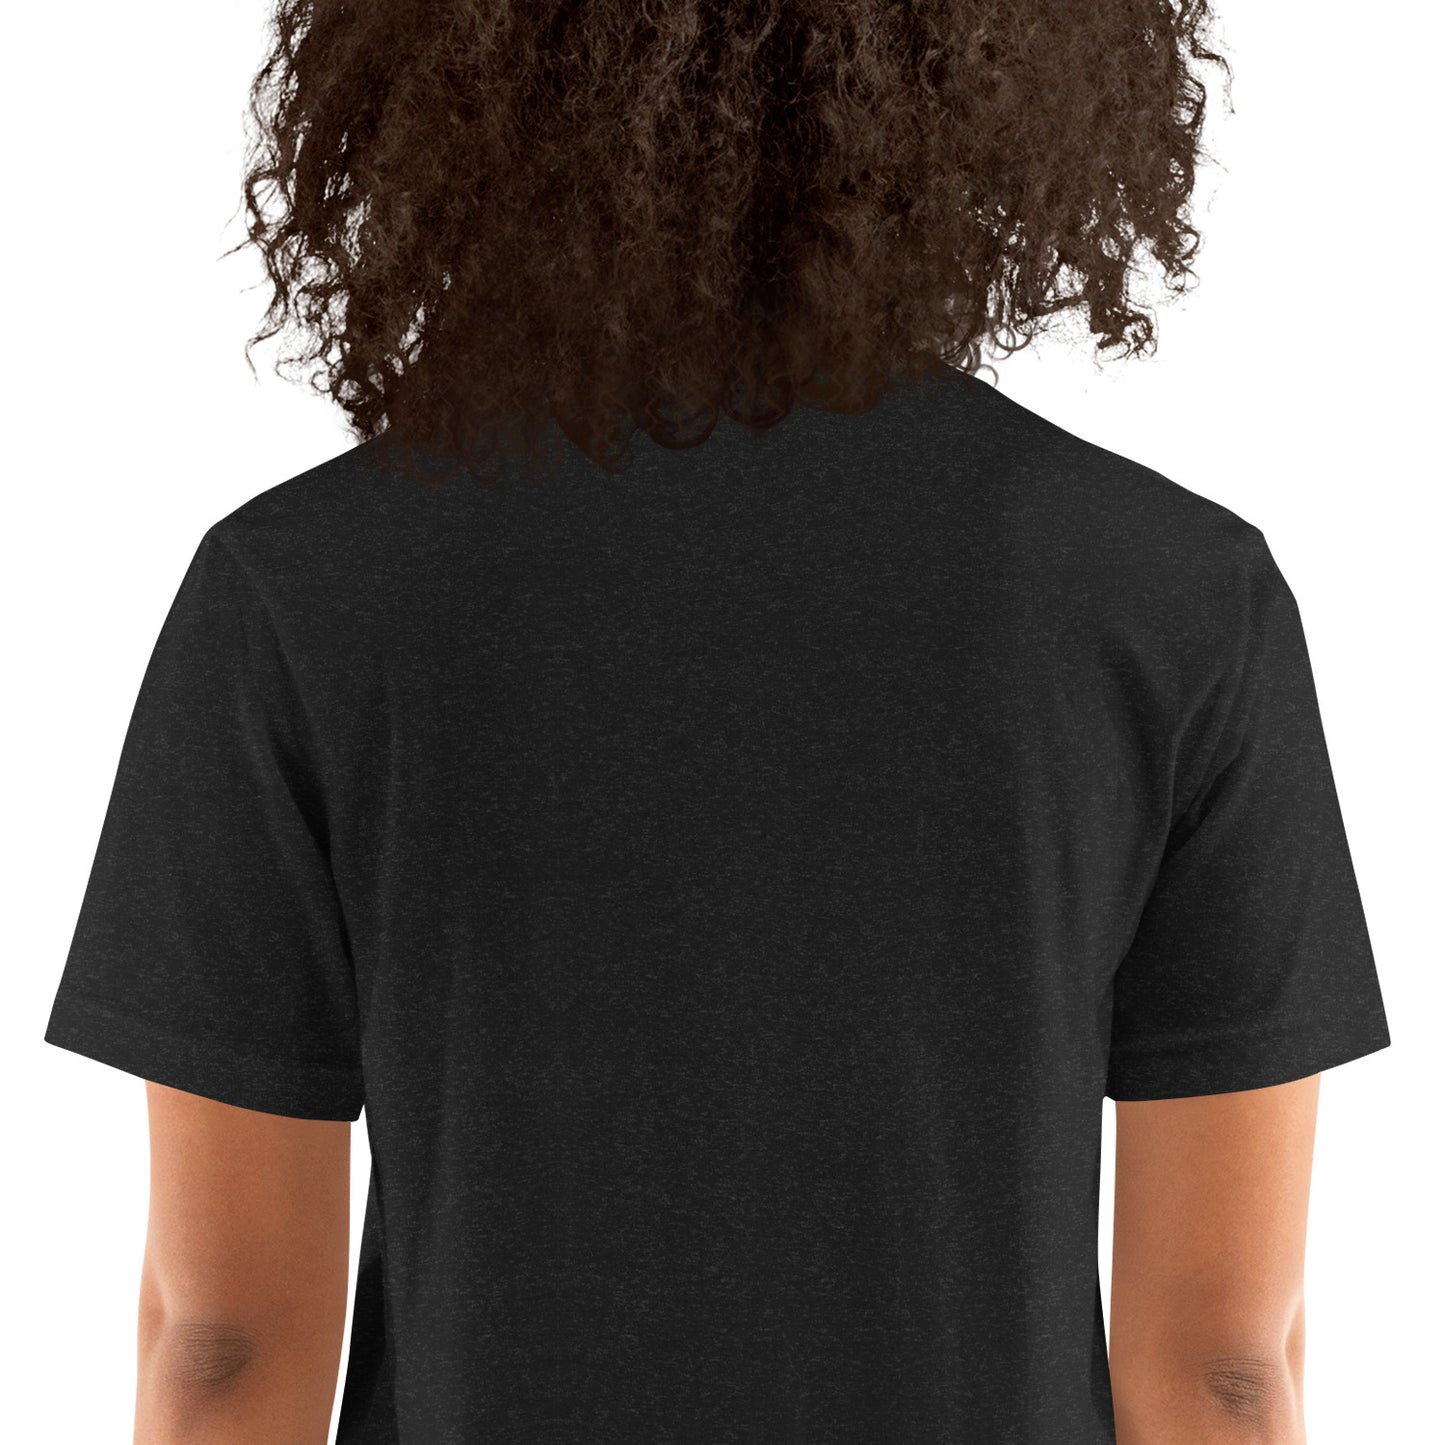  Unisex T-Shirt - Black Heather - Back view of t-shirt on woman - yellow Byron Bay Surf Club logo on front - Genuine Byron Bay Merchandise | Produced by Go Sea Kayak Byron Bay 